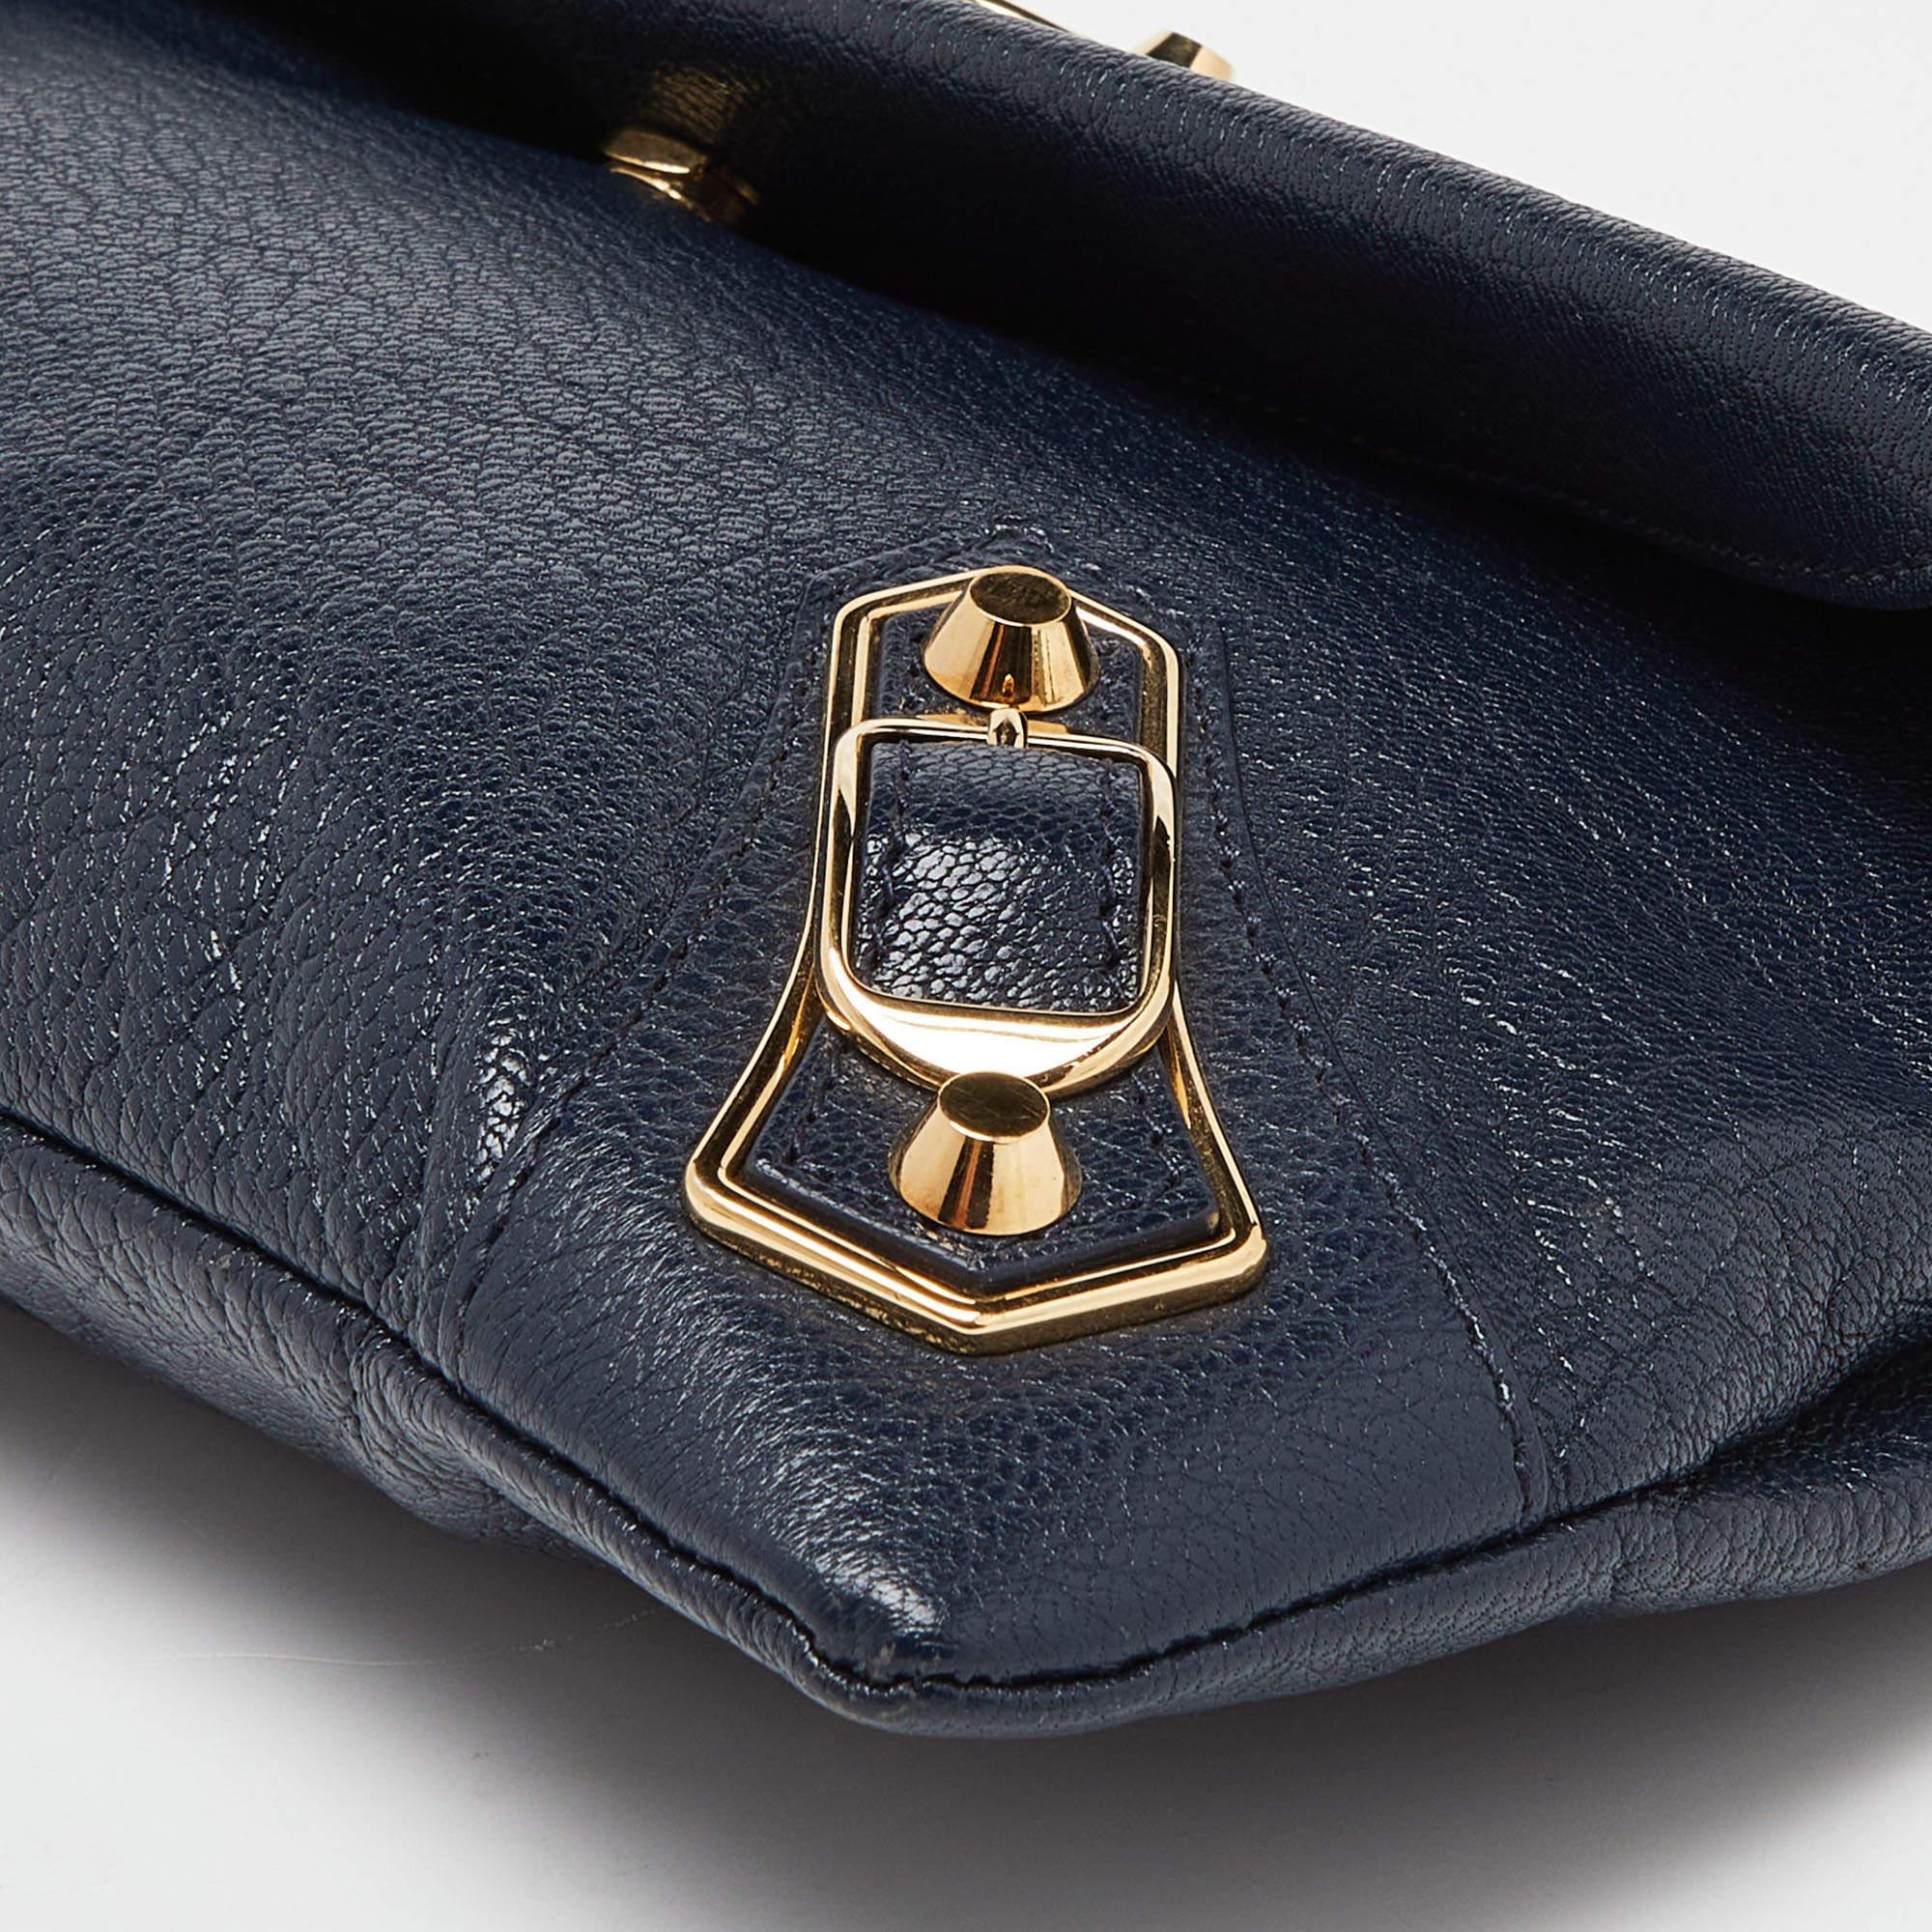 Balenciaga Navy Blue Leather Metallic Edge Envelope Clutch Bag 6